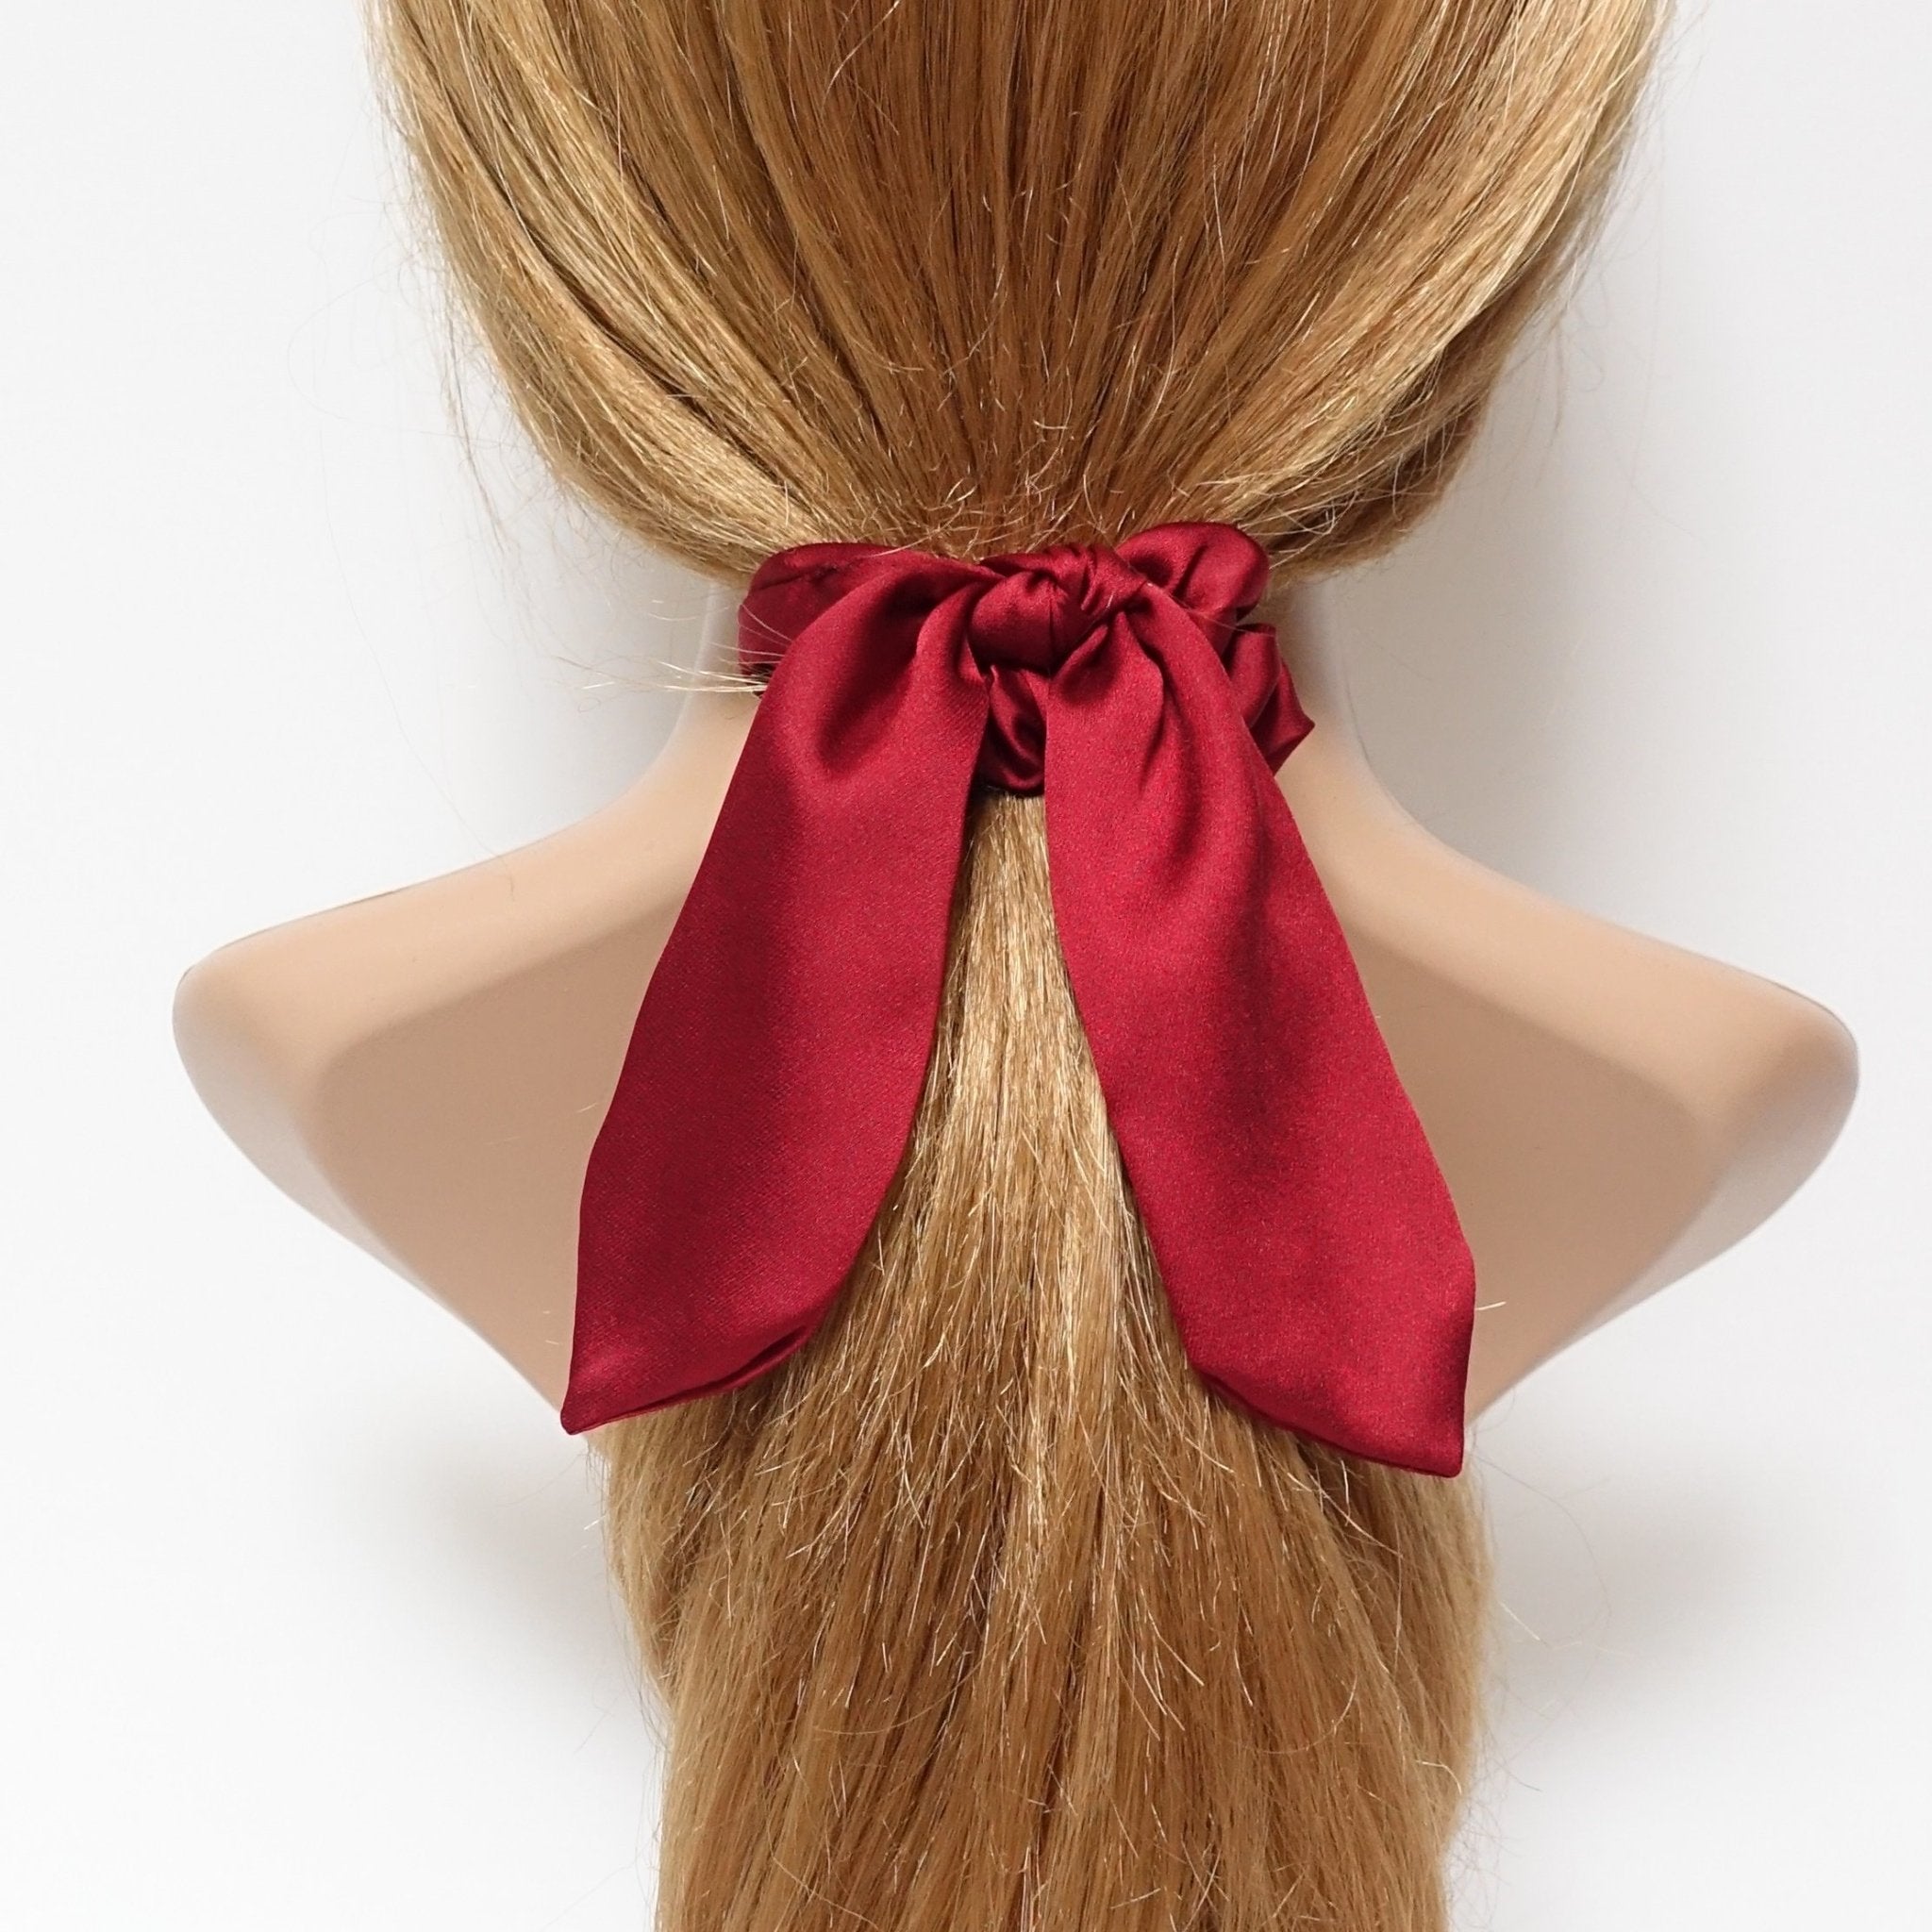 veryshine.com scrunchies/hair holder Red wine satin hair bow knot scrunchies glossy tail bow scrunchy women hair accessory